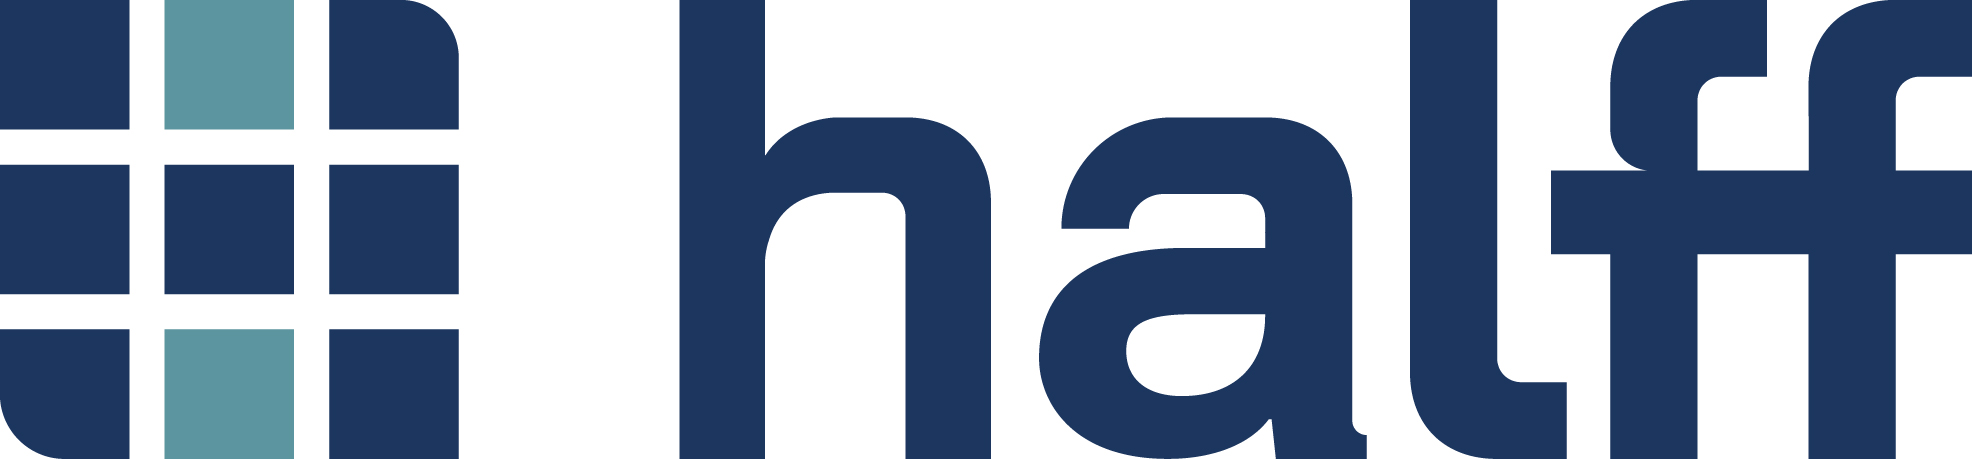 Halff logo